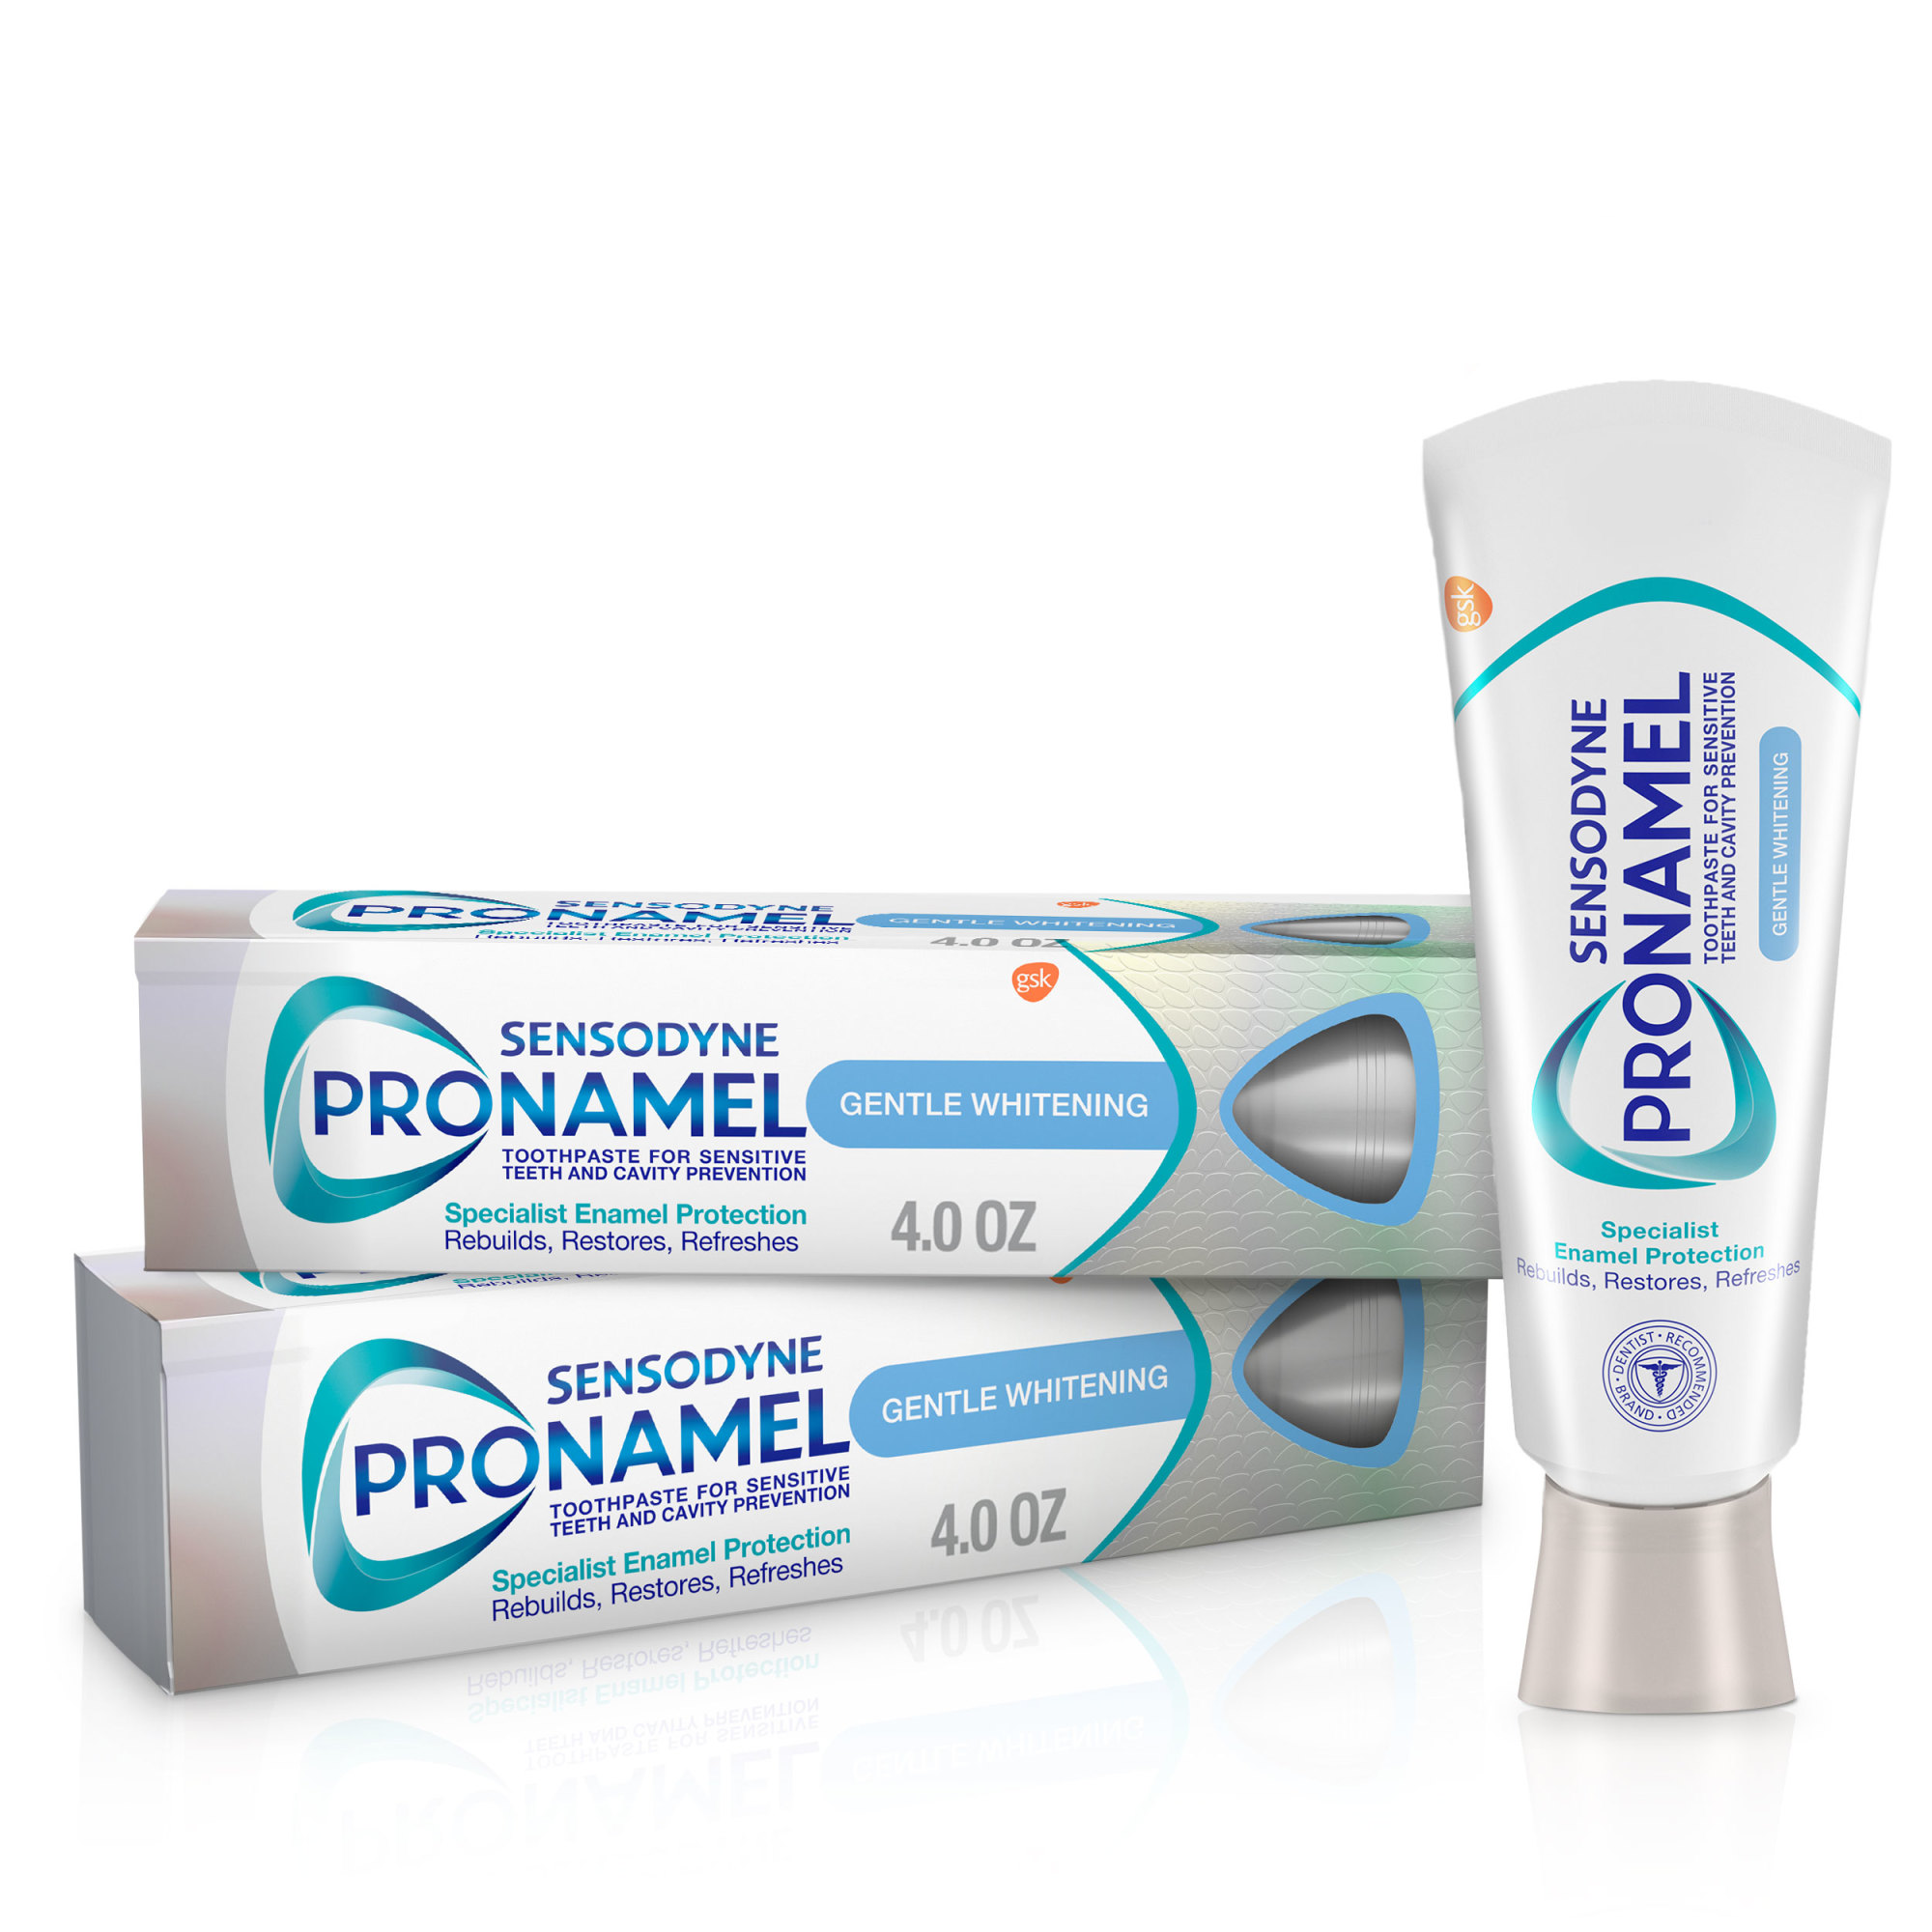 Sensodyne Pronamel Gentle Whitening Sensitive Toothpaste, Alpine Breeze, 4 Oz, 2 Pack - image 1 of 11